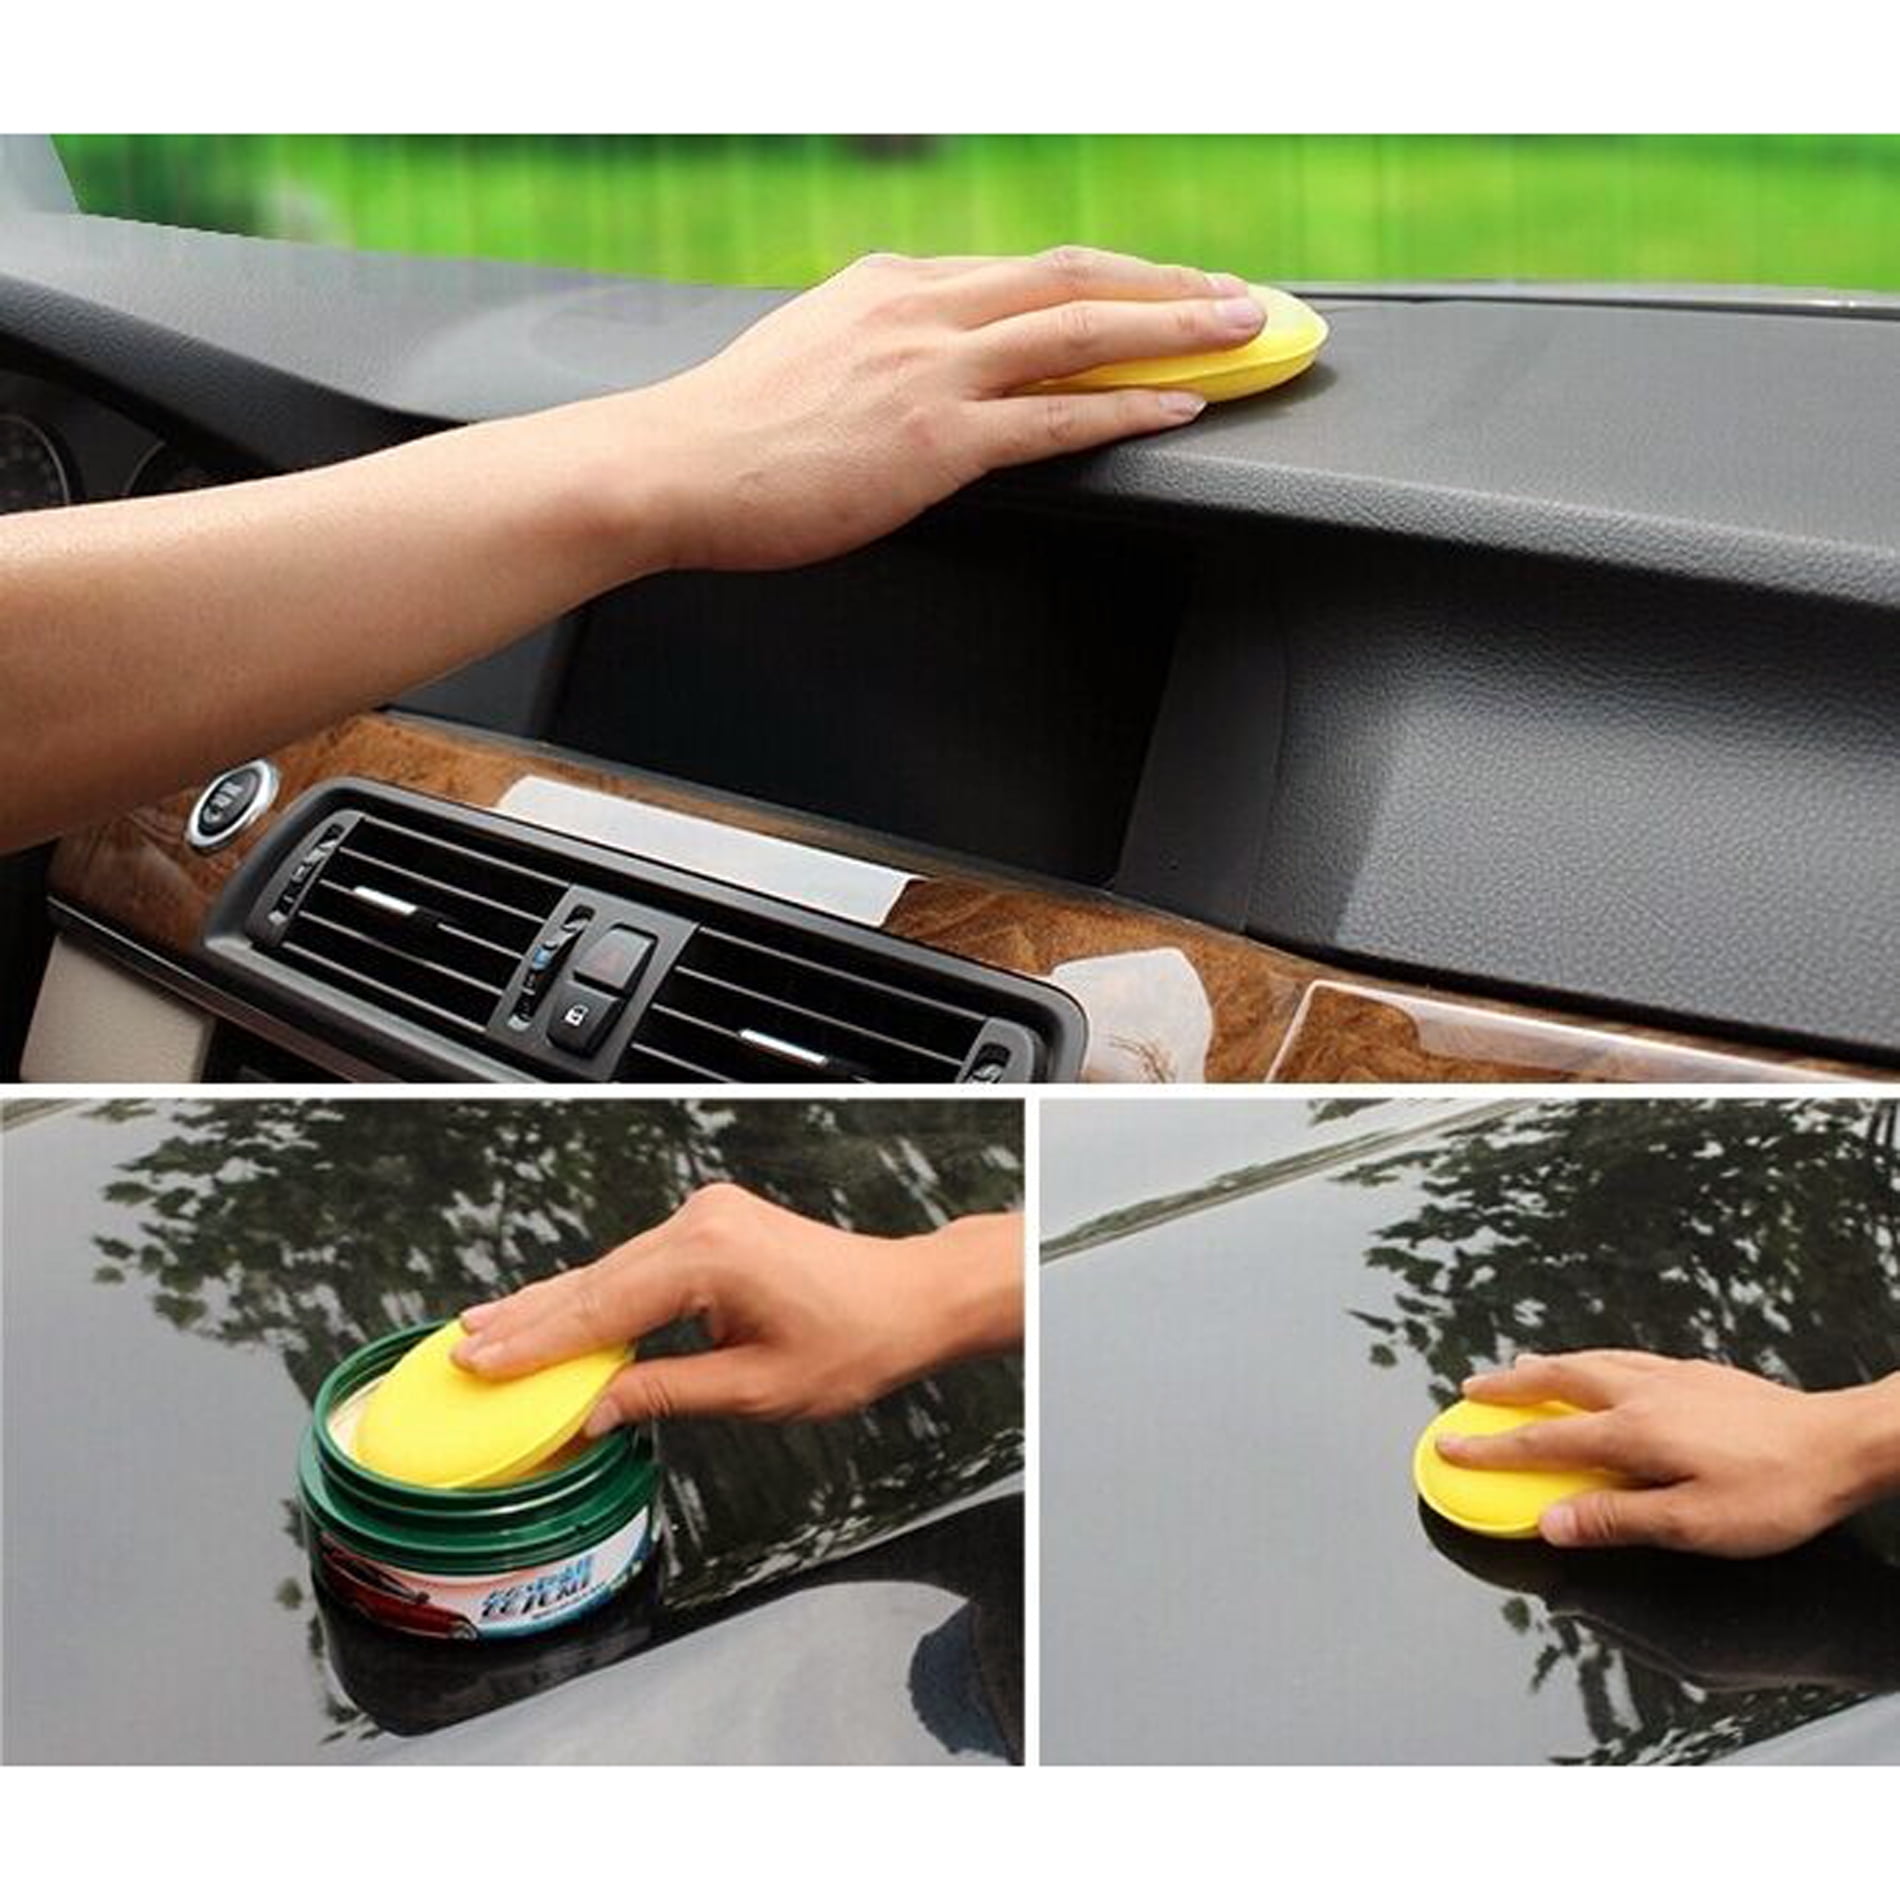 Morza 12pcs Waxing Polish Wax Foam Sponge Applicator Pads for Clean Cars Vehicle Glass 